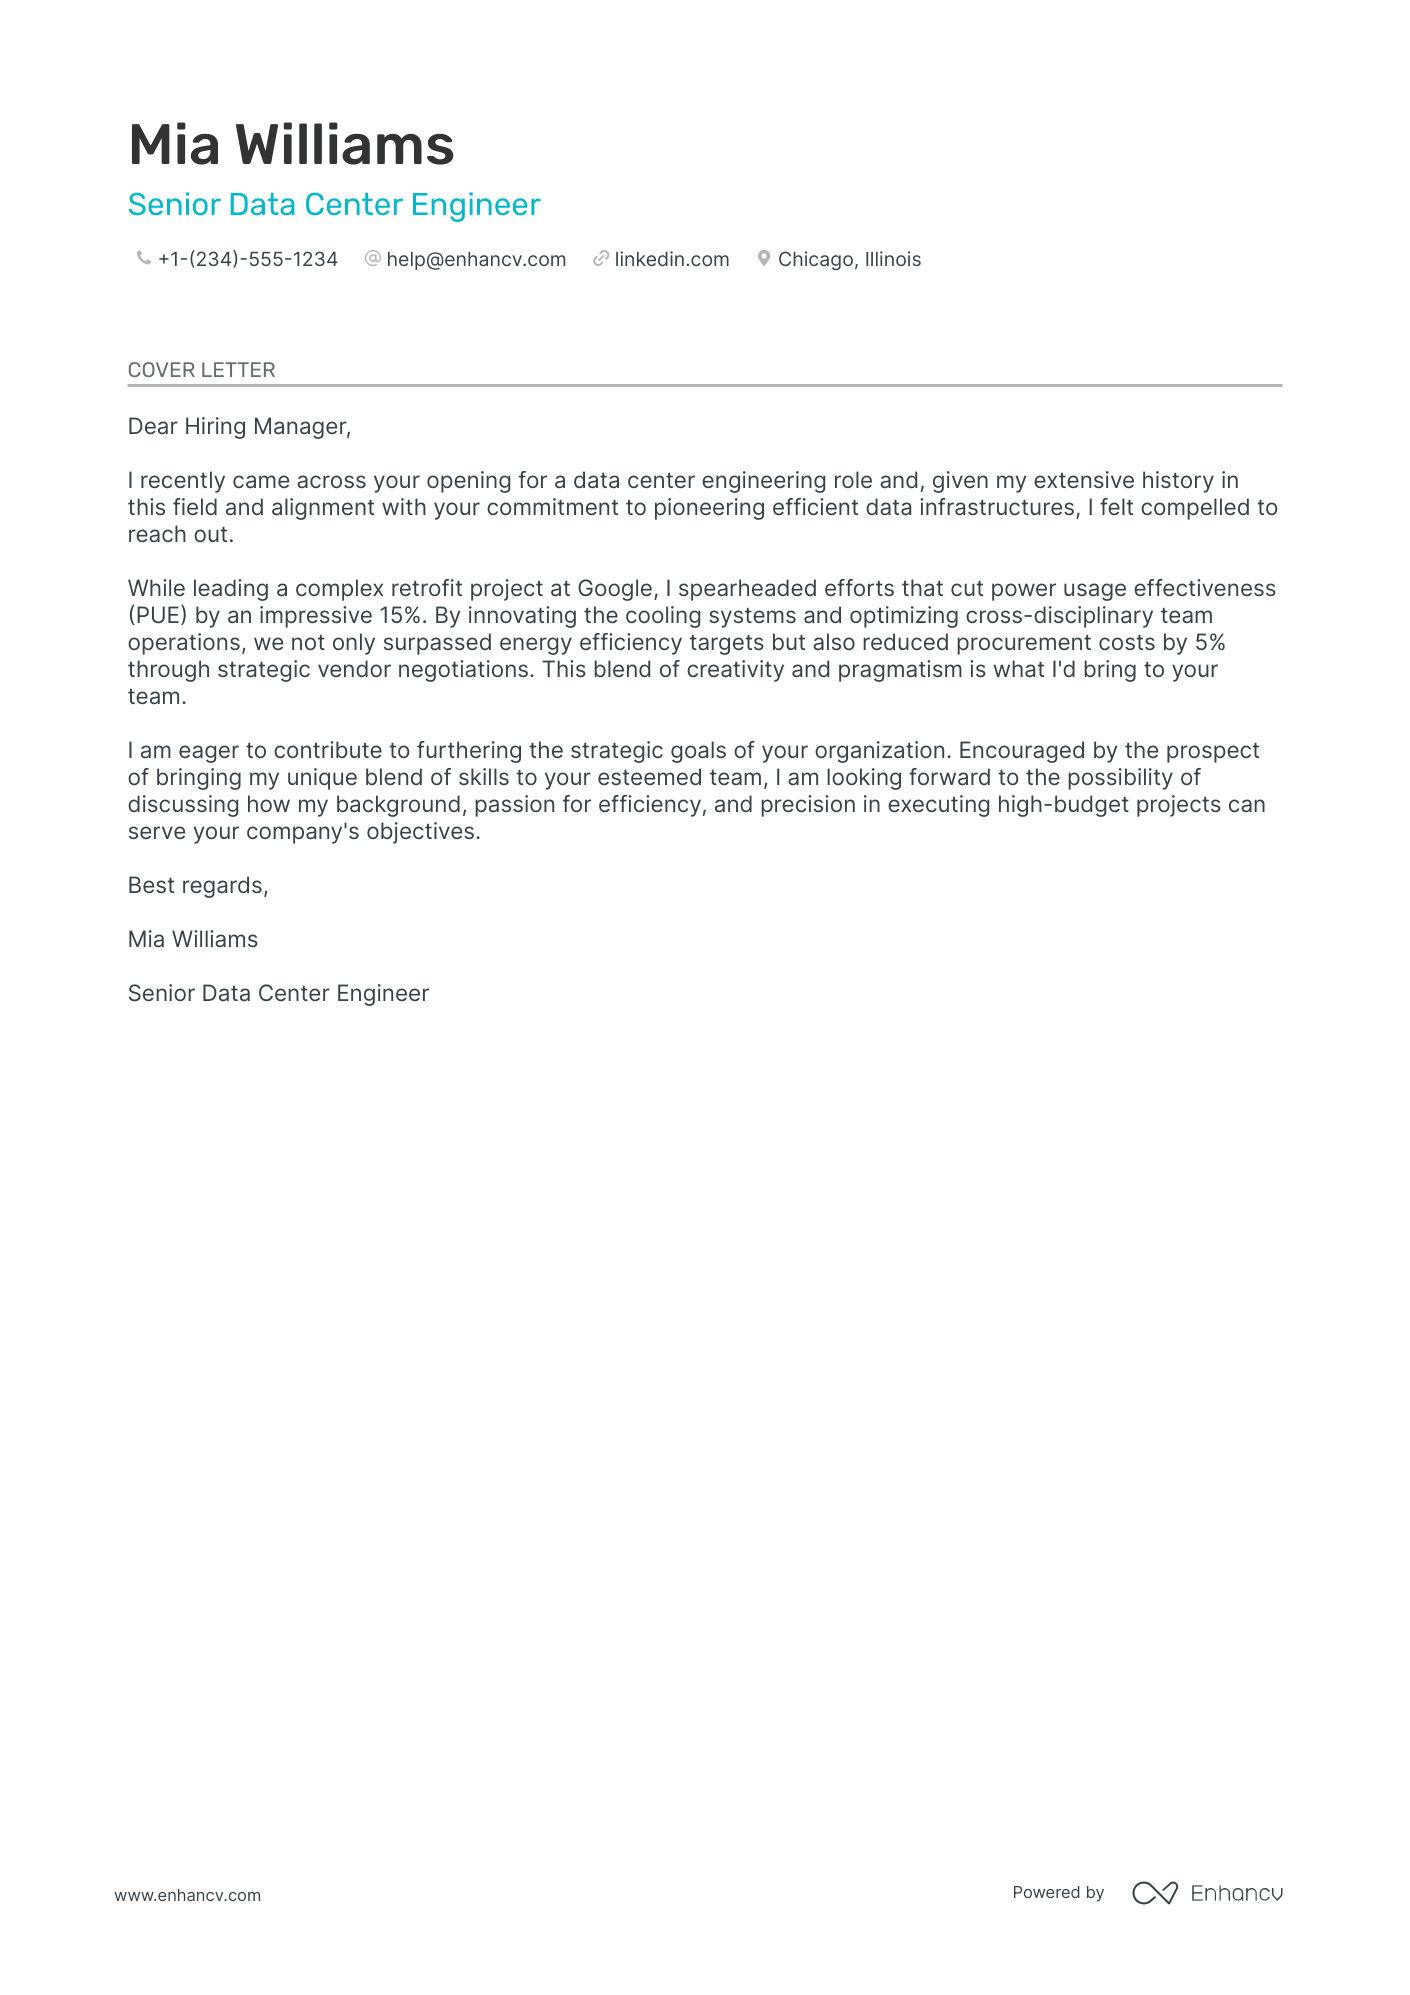 Engineering Program Manager cover letter